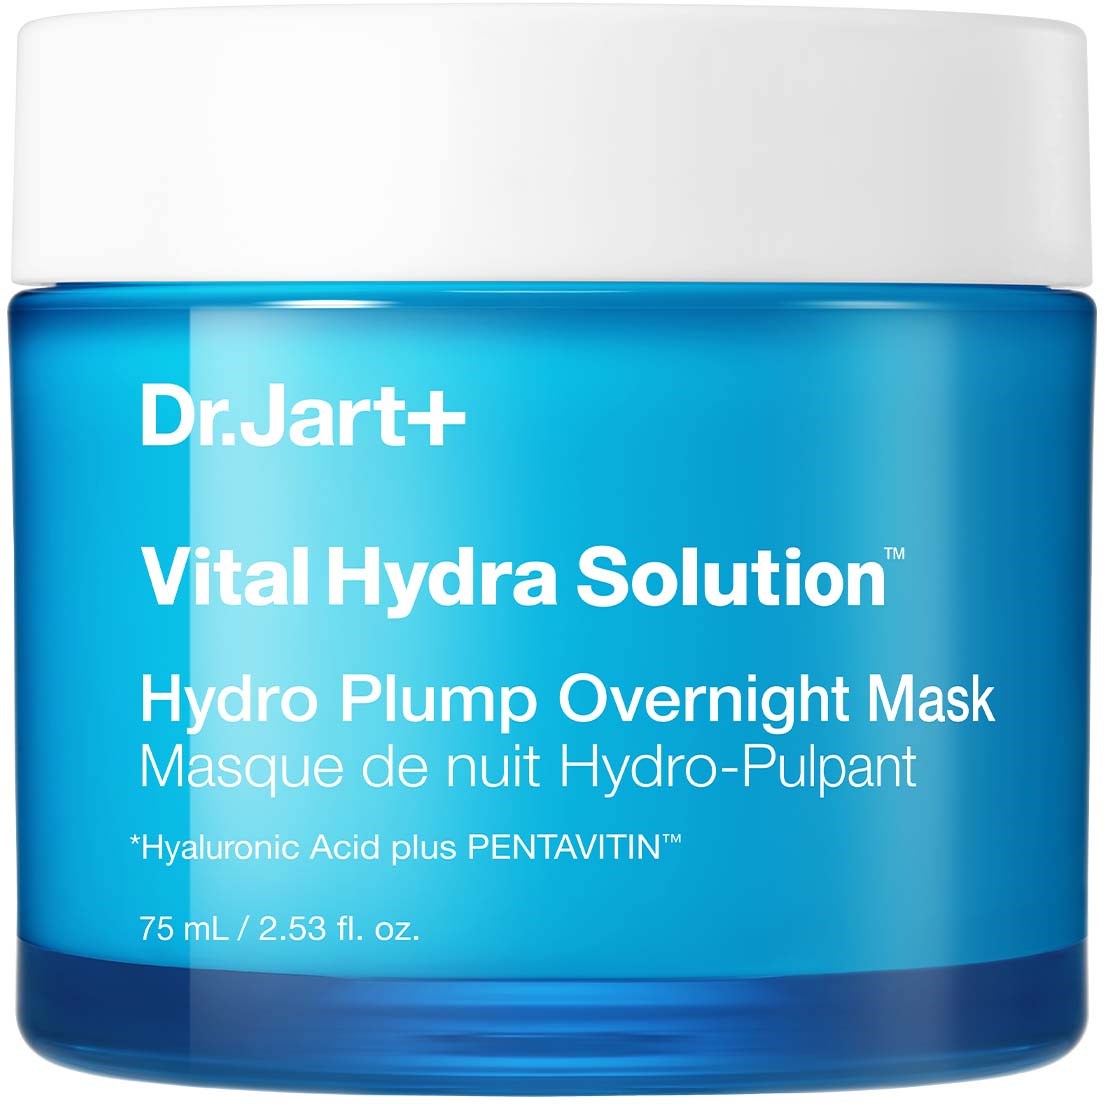 Zdjęcia - Maska do twarzy Dr. JartPlus Dr.Jart+ Vital Hydra Solution Hydro Plump Overnight Mask 75 ml 